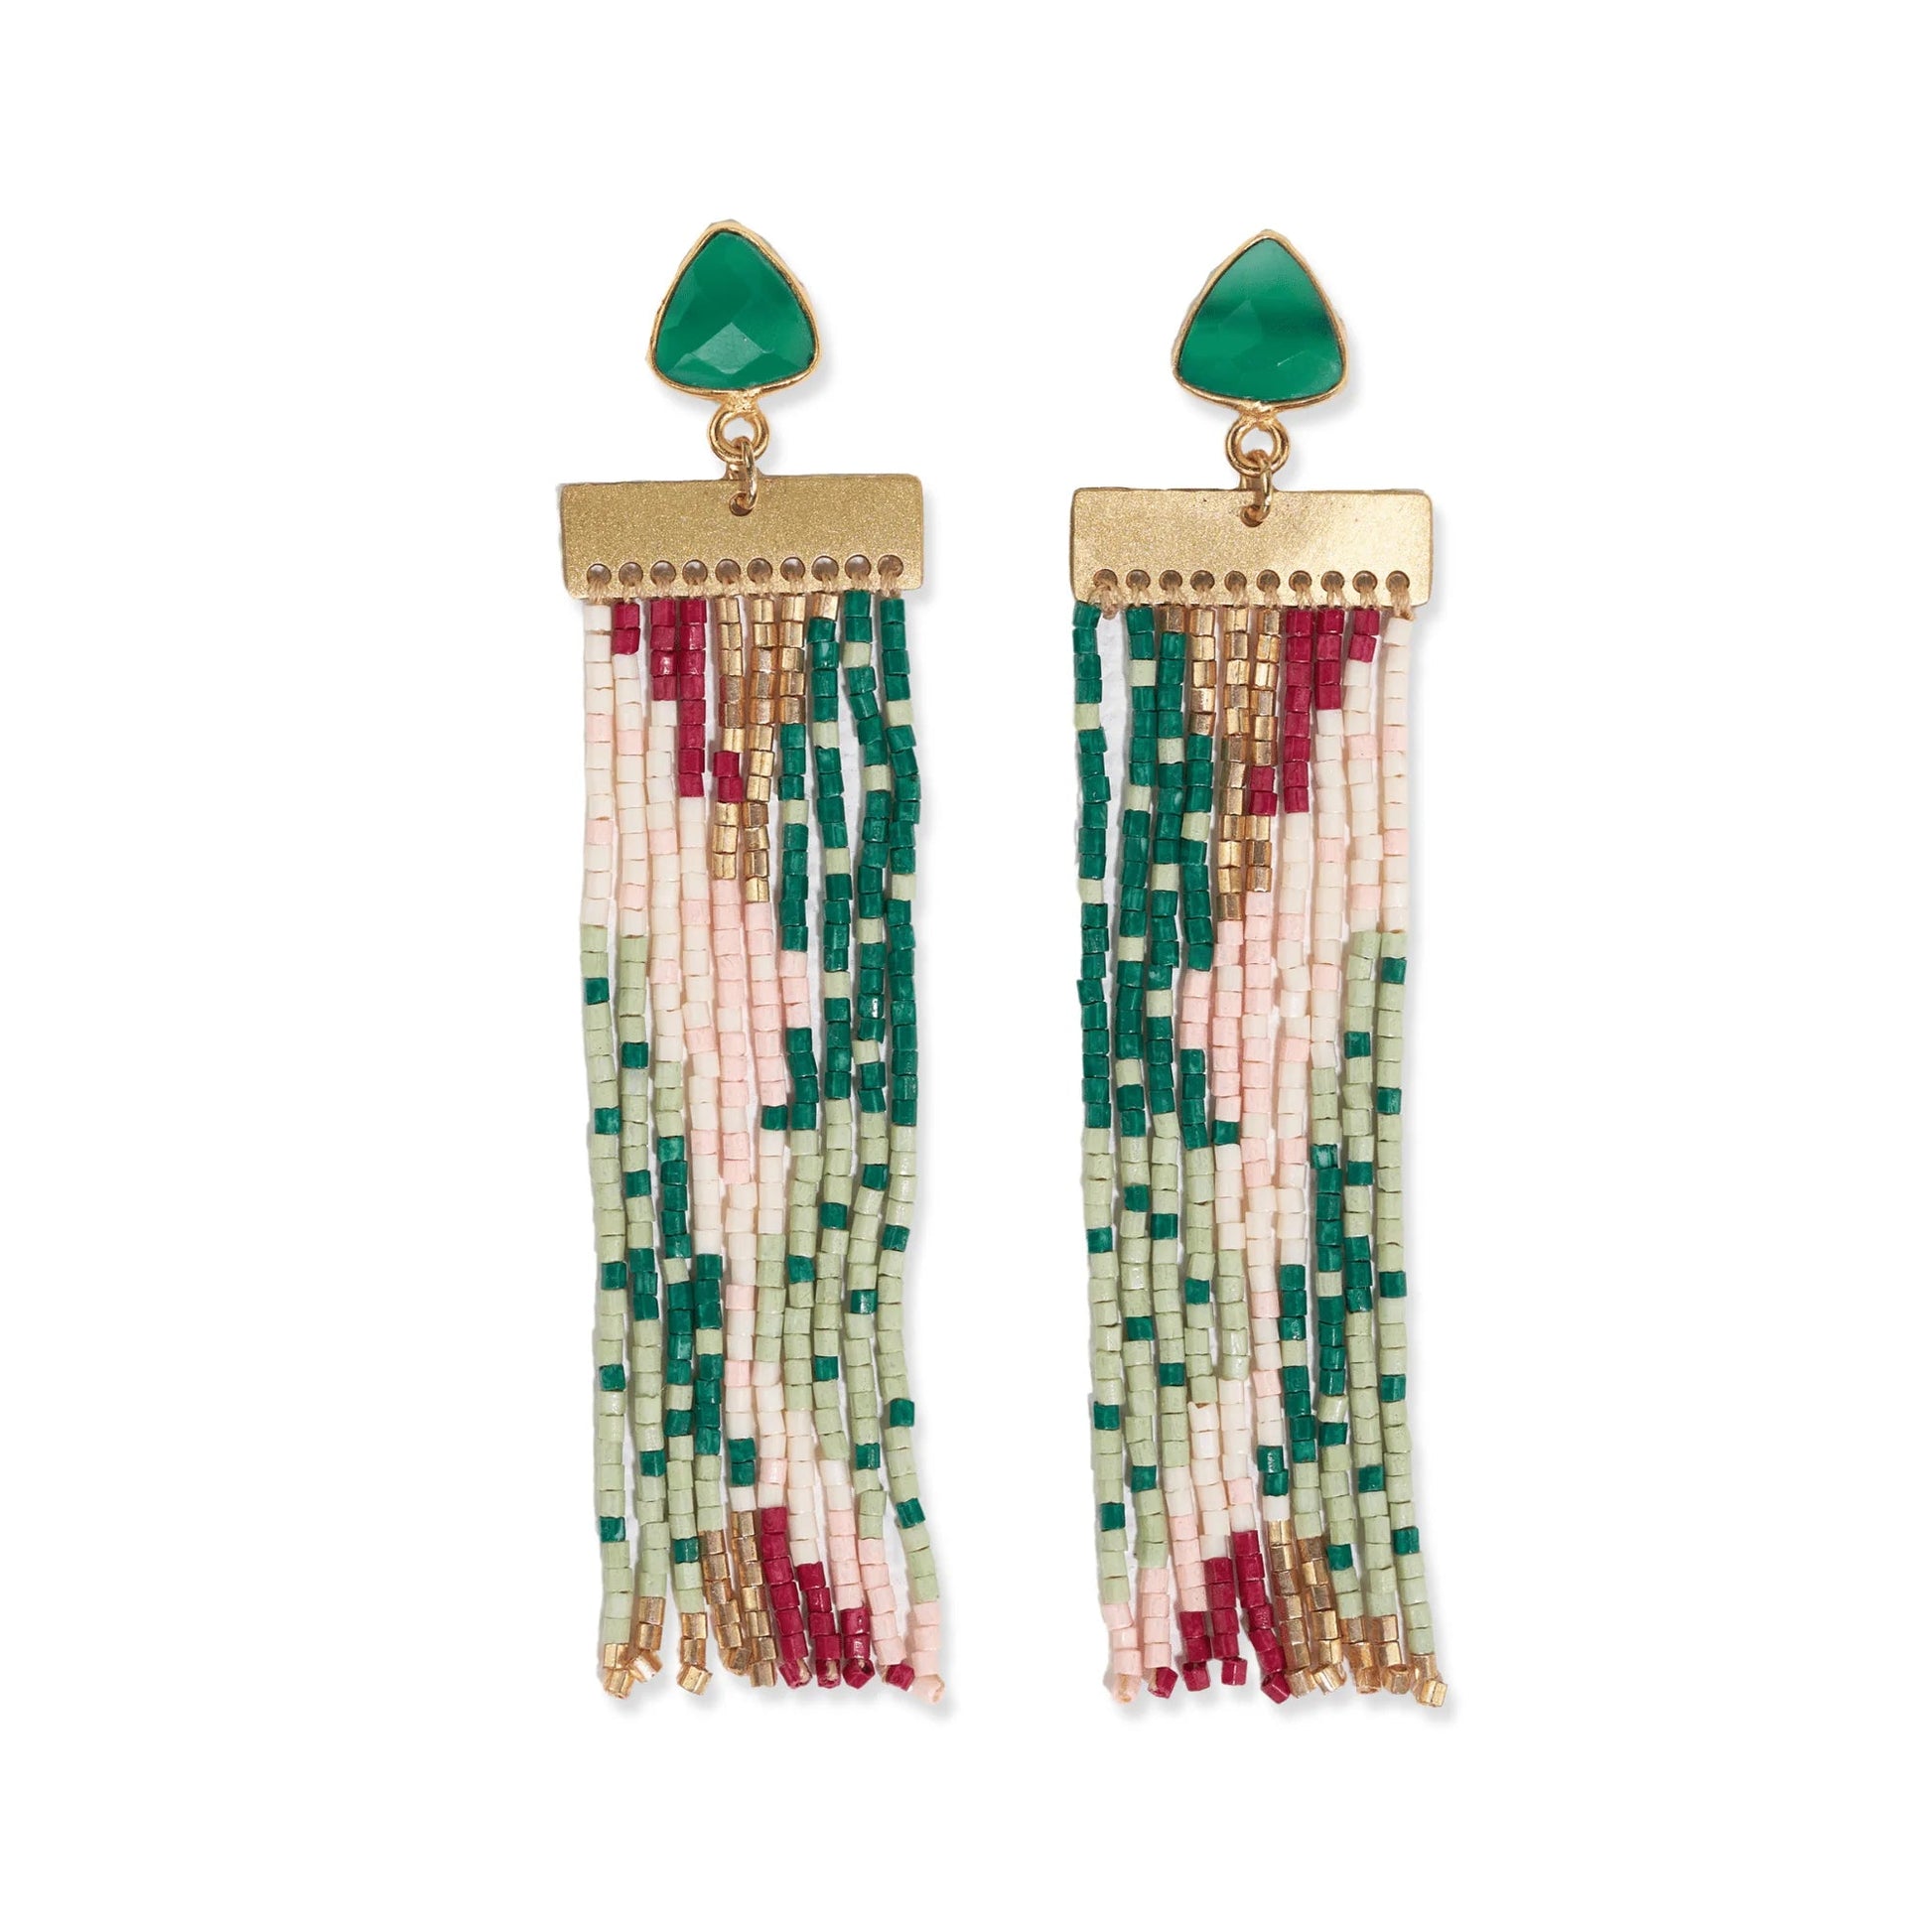 Lilah Semi-Precious Stone Post With Organic Shapes Beaded Fringe Earrings Emerald - The Farmhouse AZ